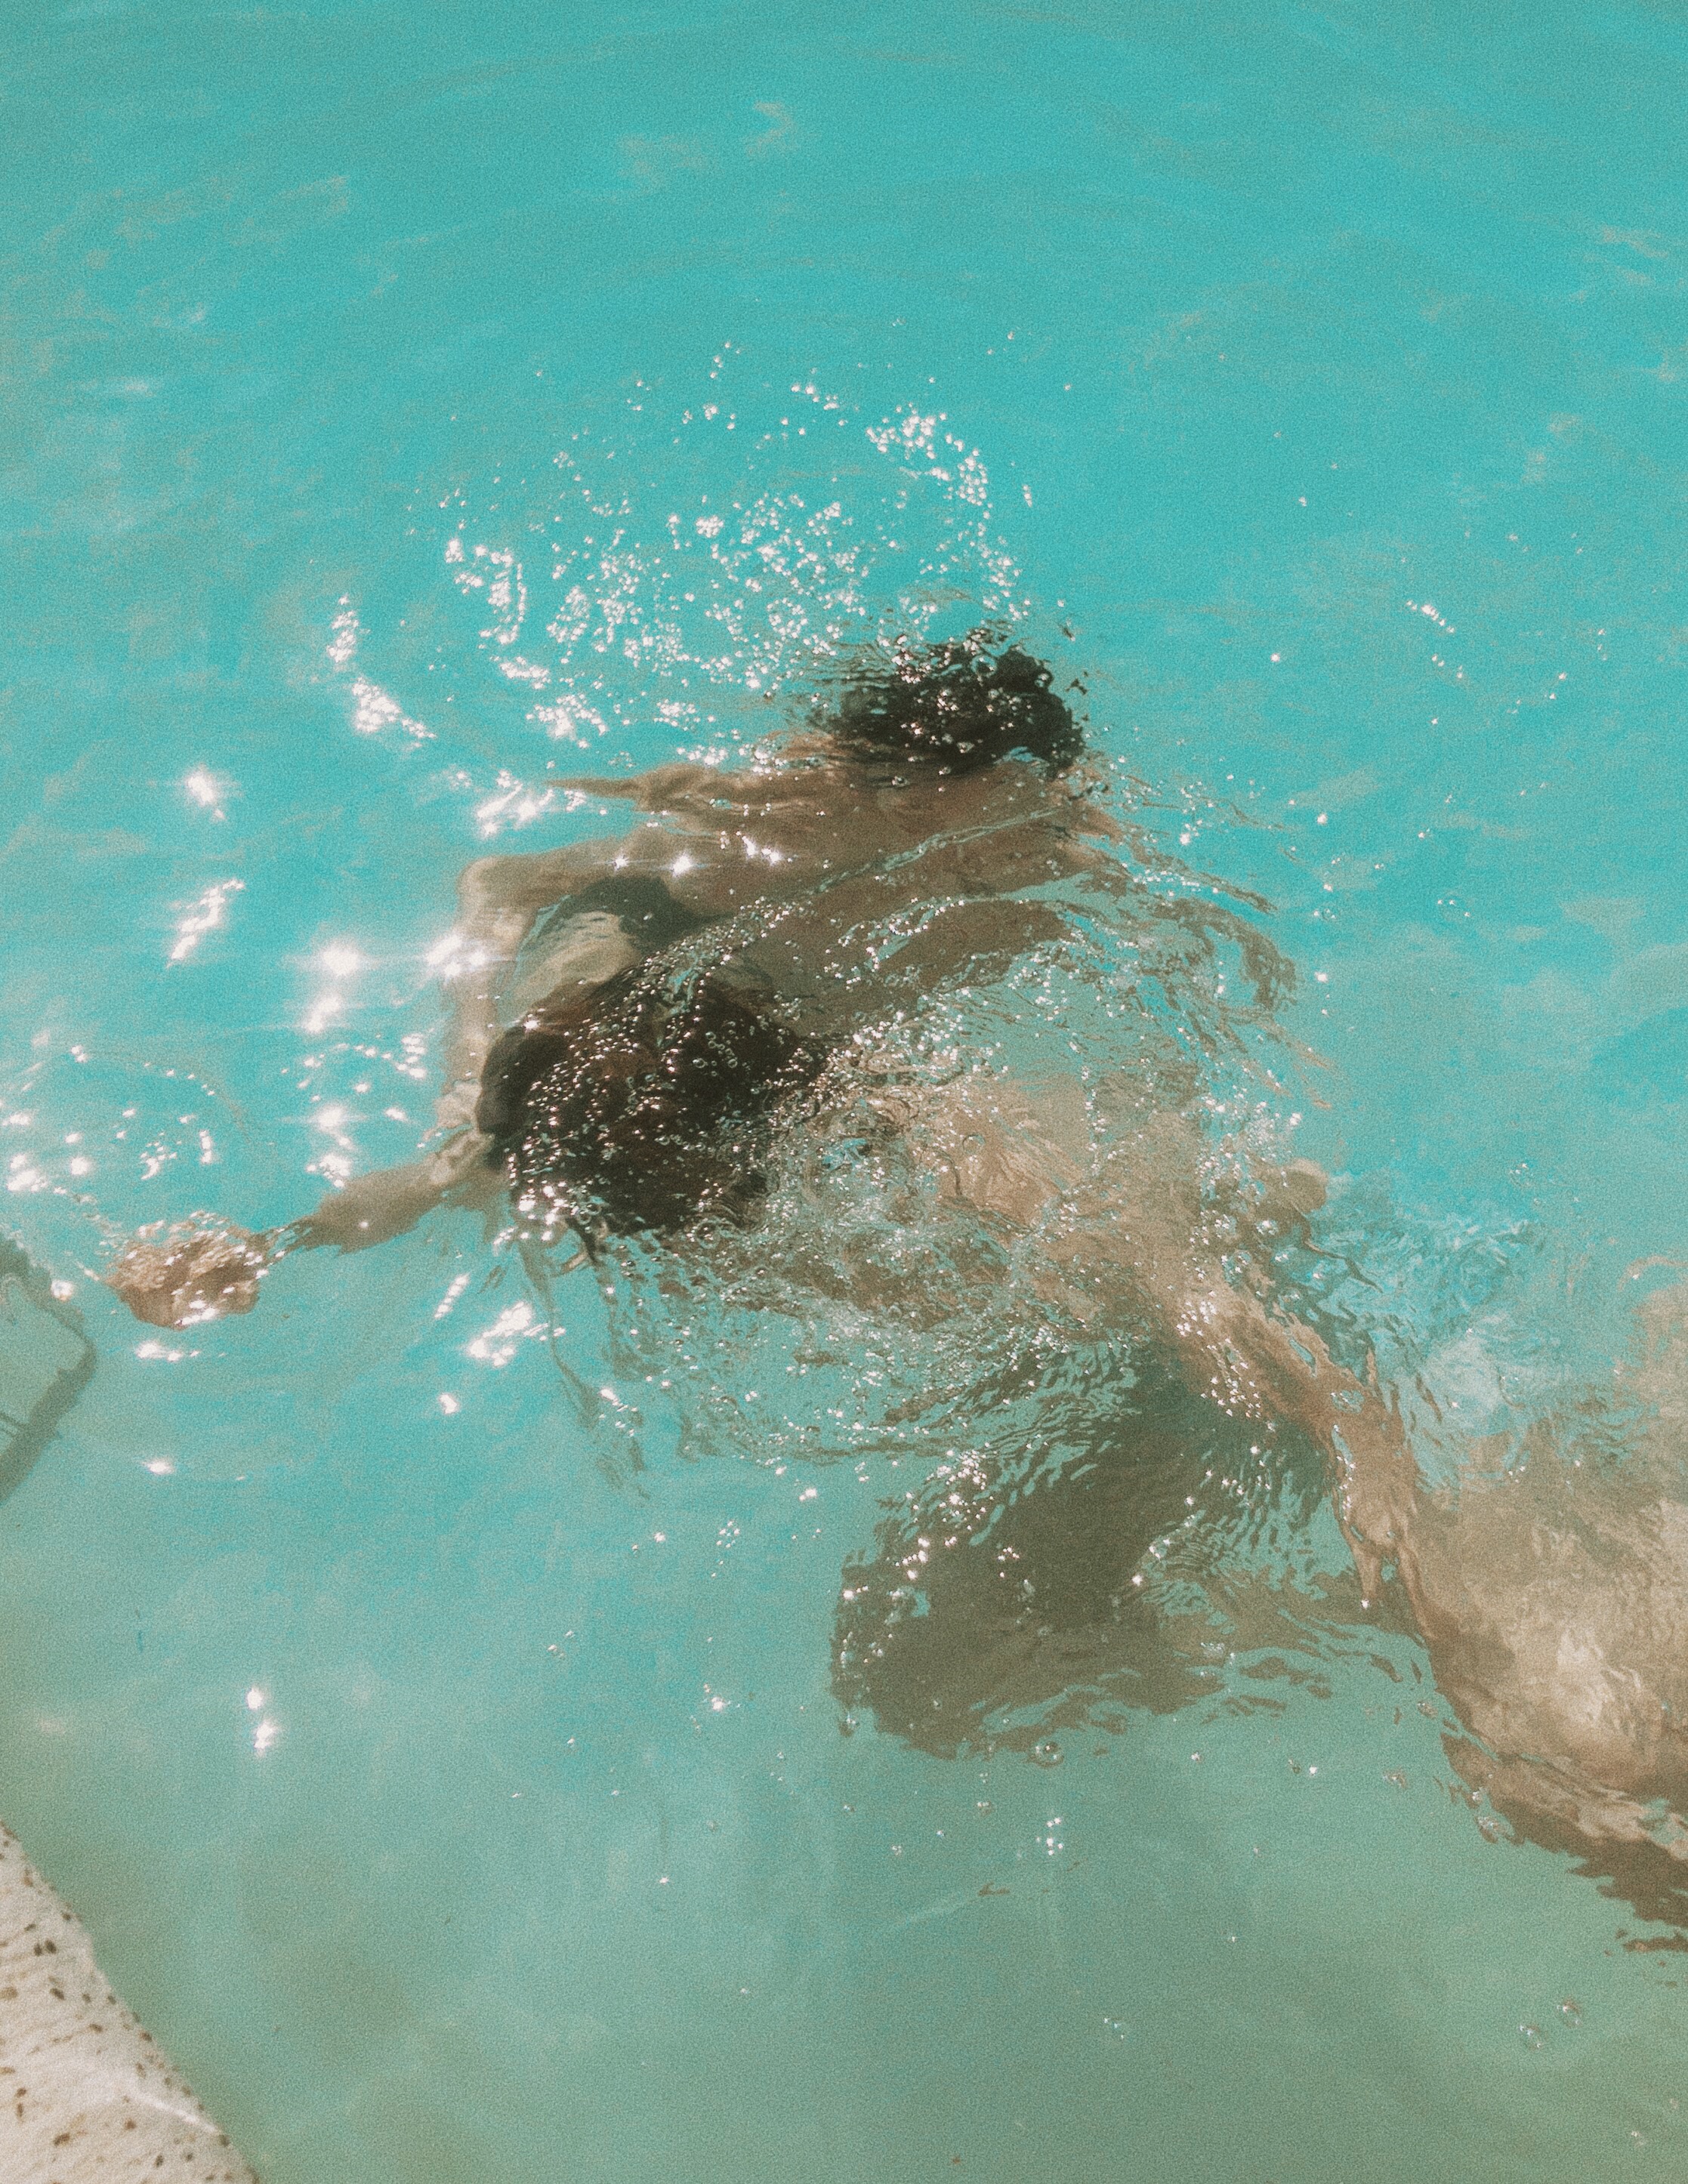 People under water taking a selfie in a pool.